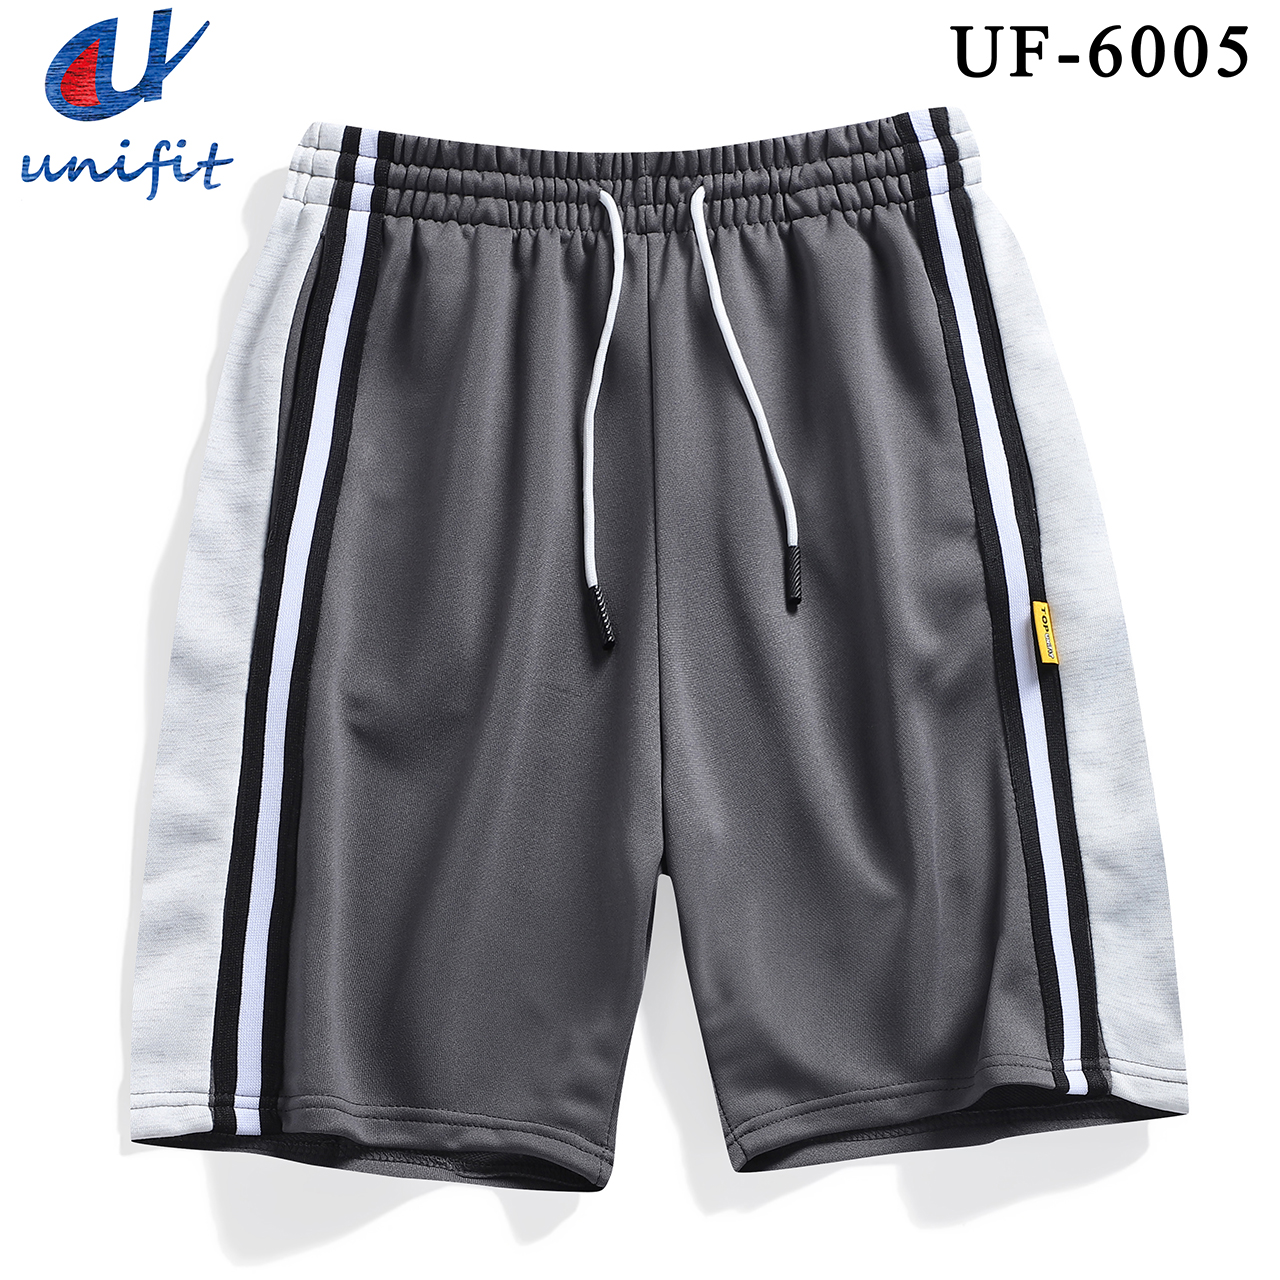 UNIFIT Men's Shorts Cotton Casual Walker Sweat Shorts UF-6005 | Lazada PH